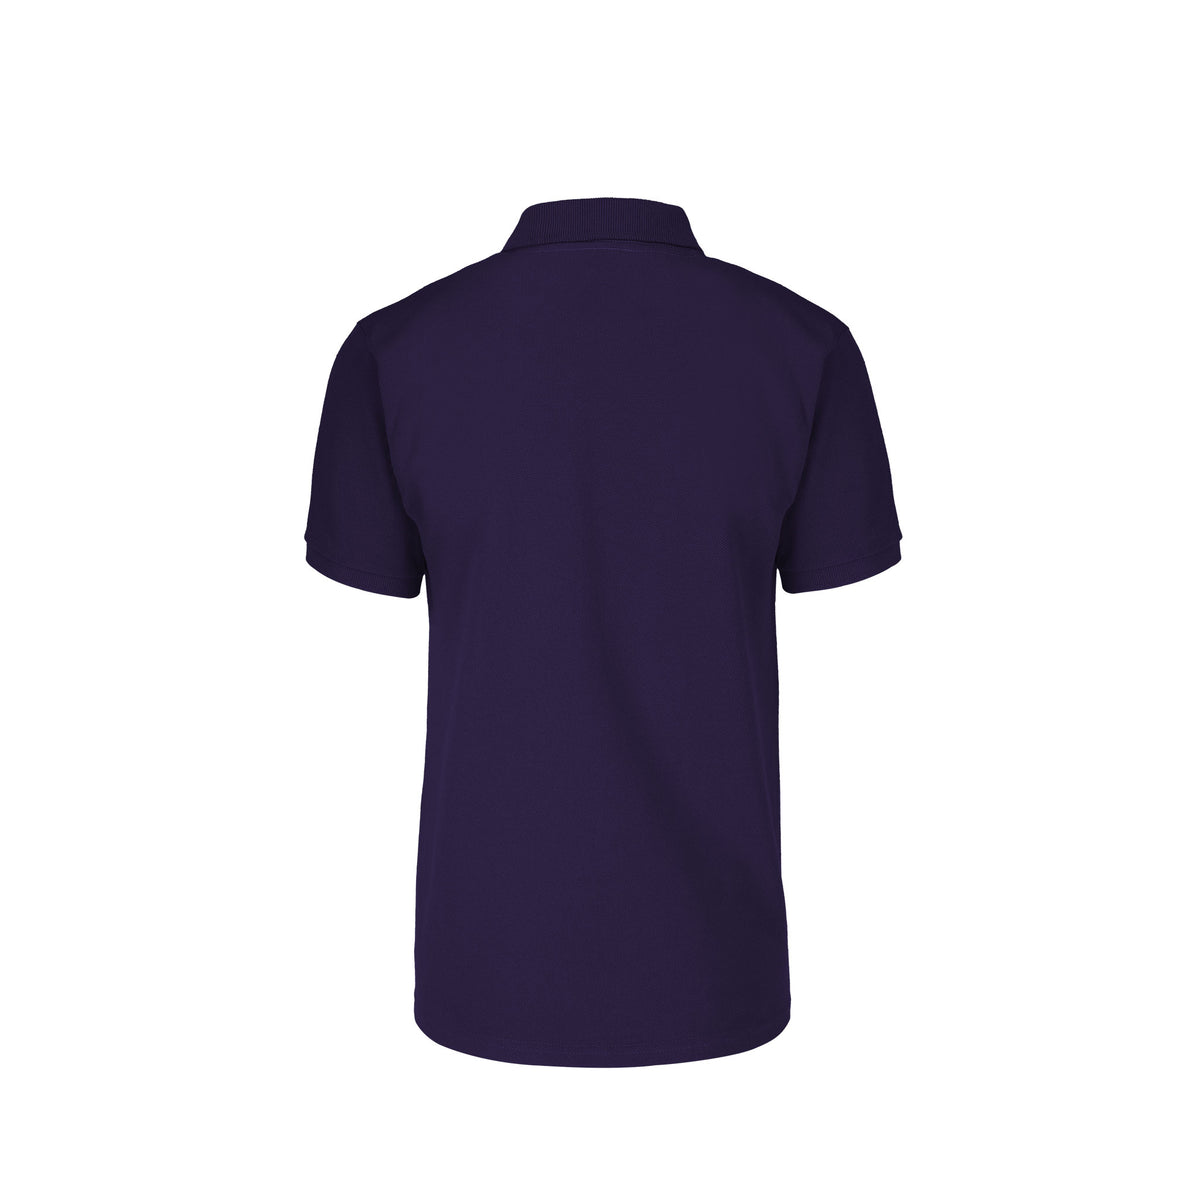 Youth’s Unisex Sport Shirt (Purple) – Yazbek USA Mint